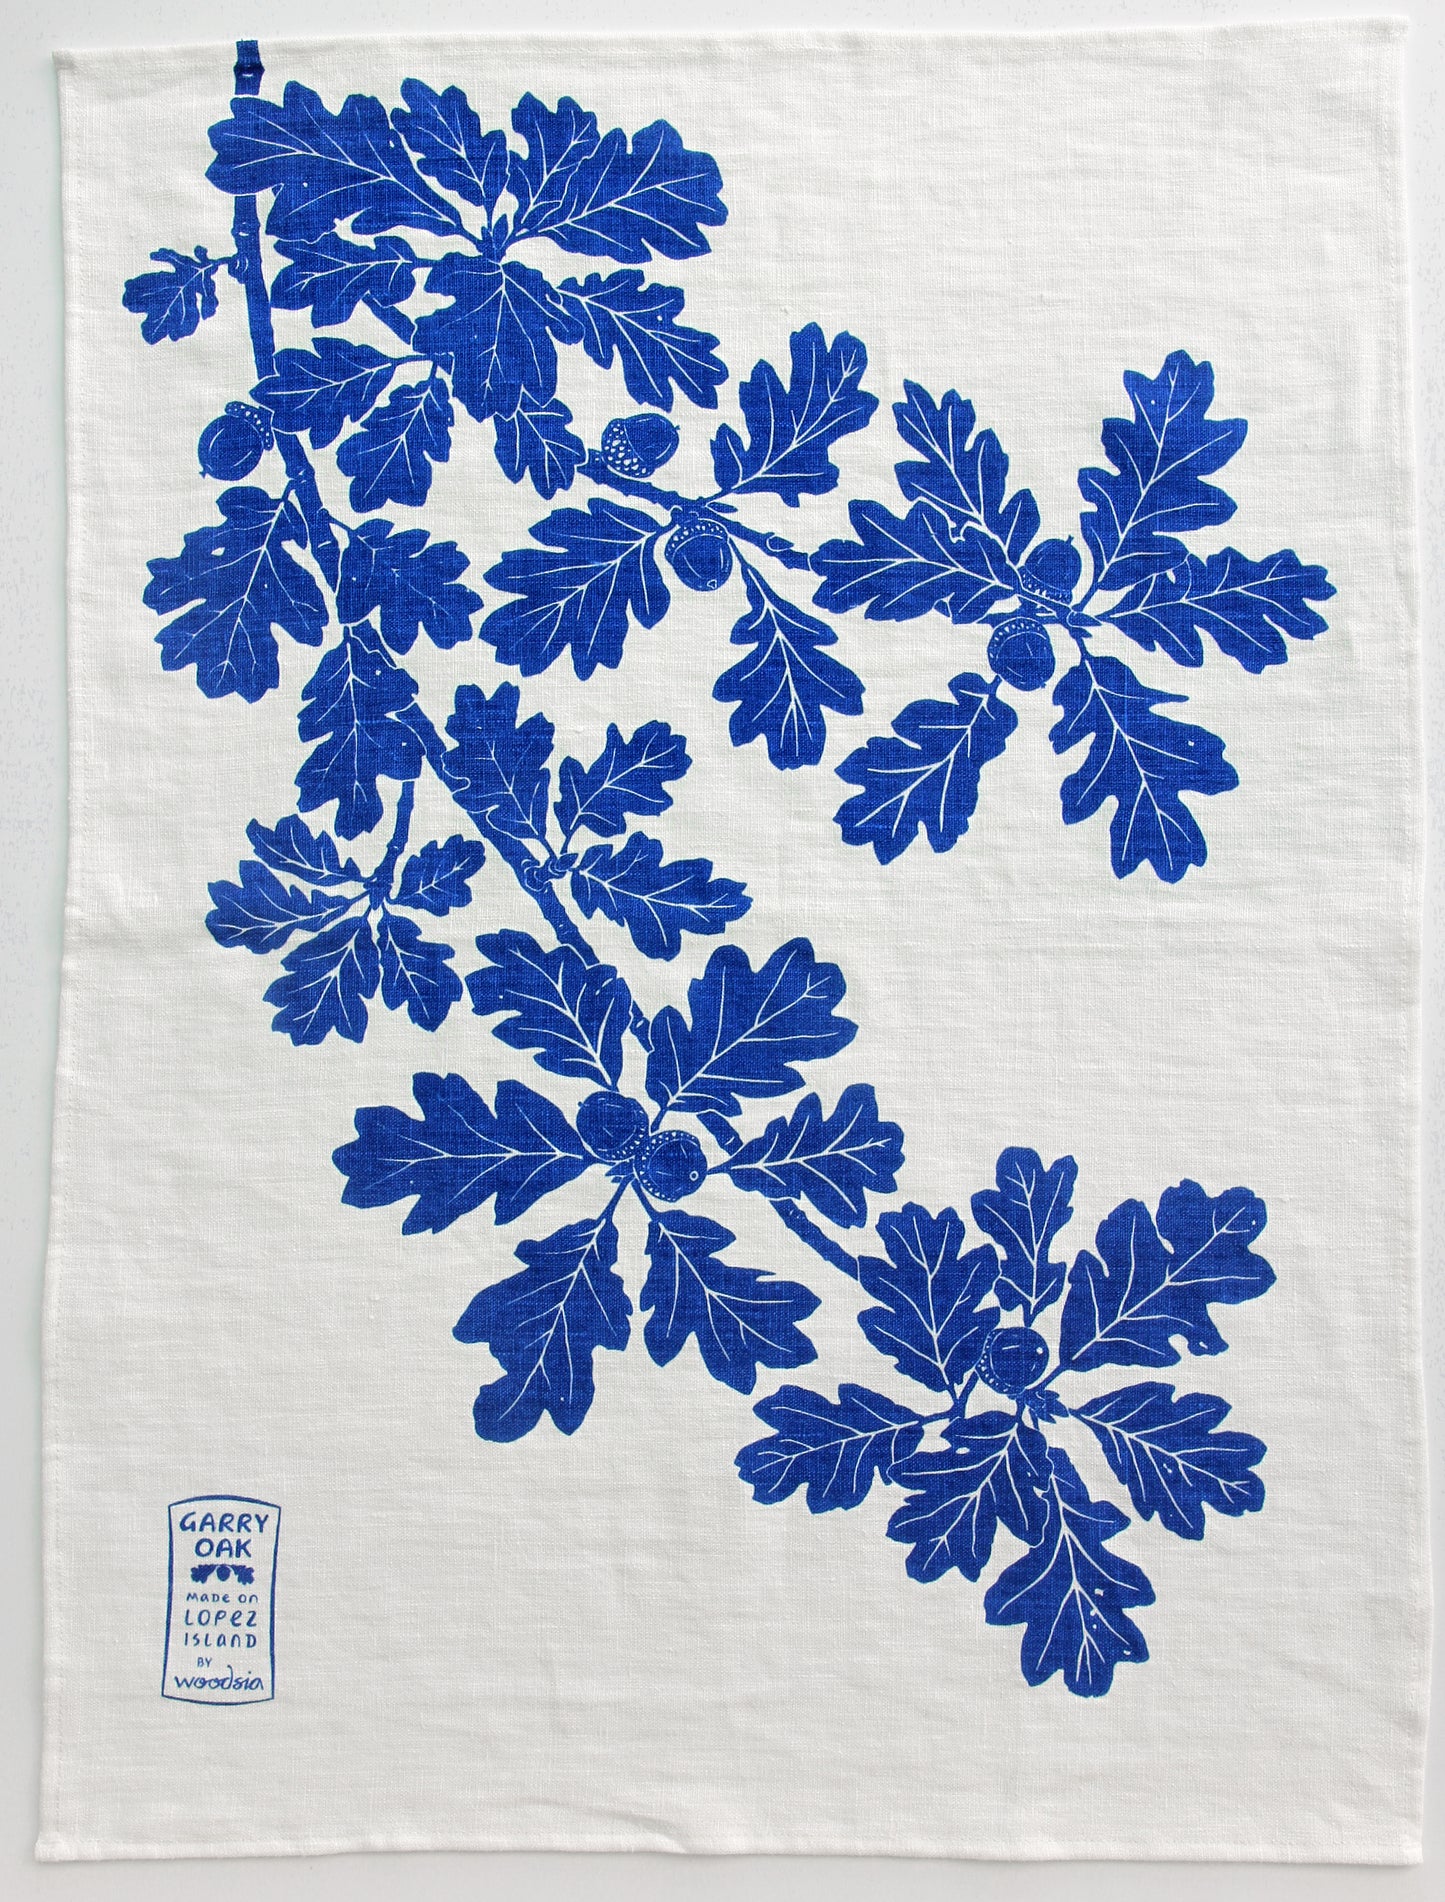 Garry Oak Kitchen Towel in Summer Blue on White Linen